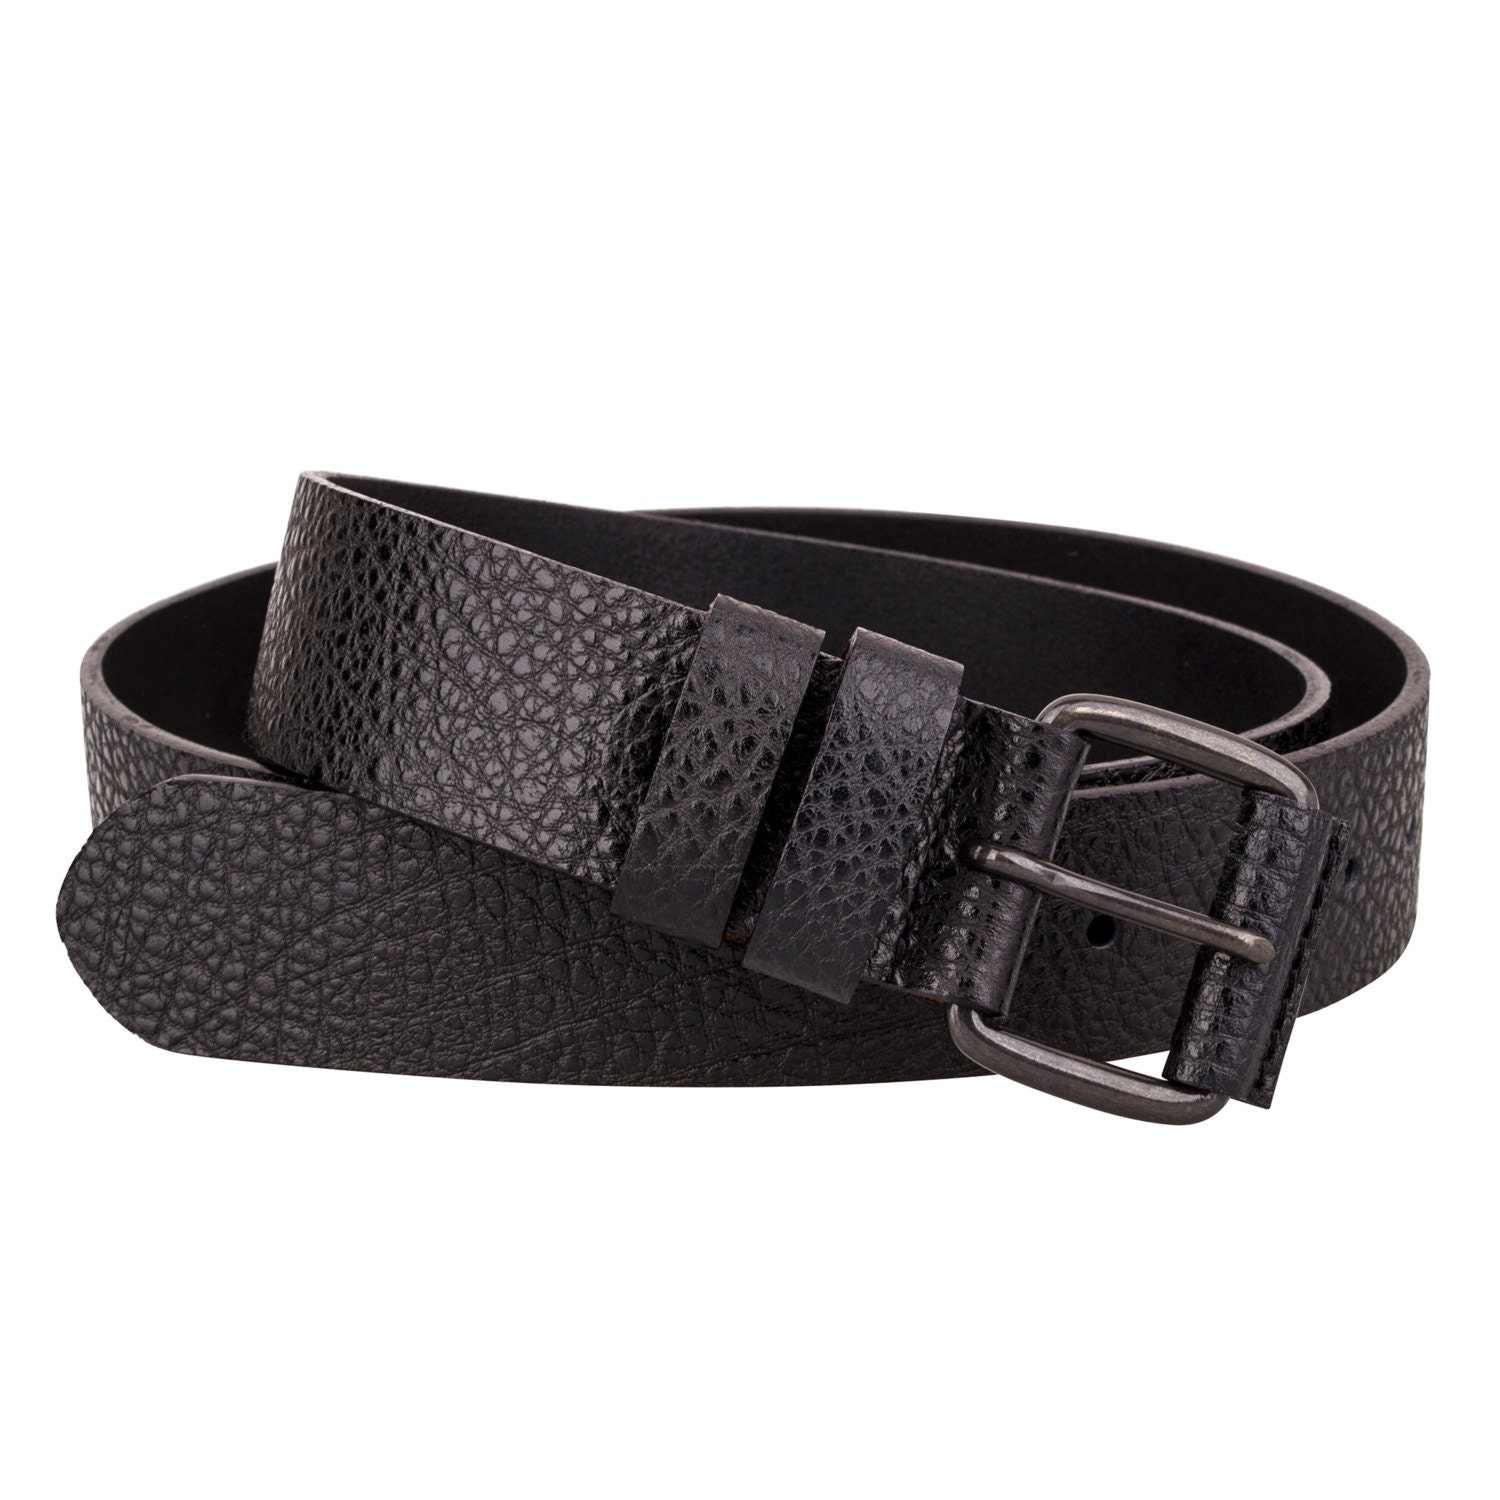 Thick leather belt Wide leather belt Gun belt Tactical belt